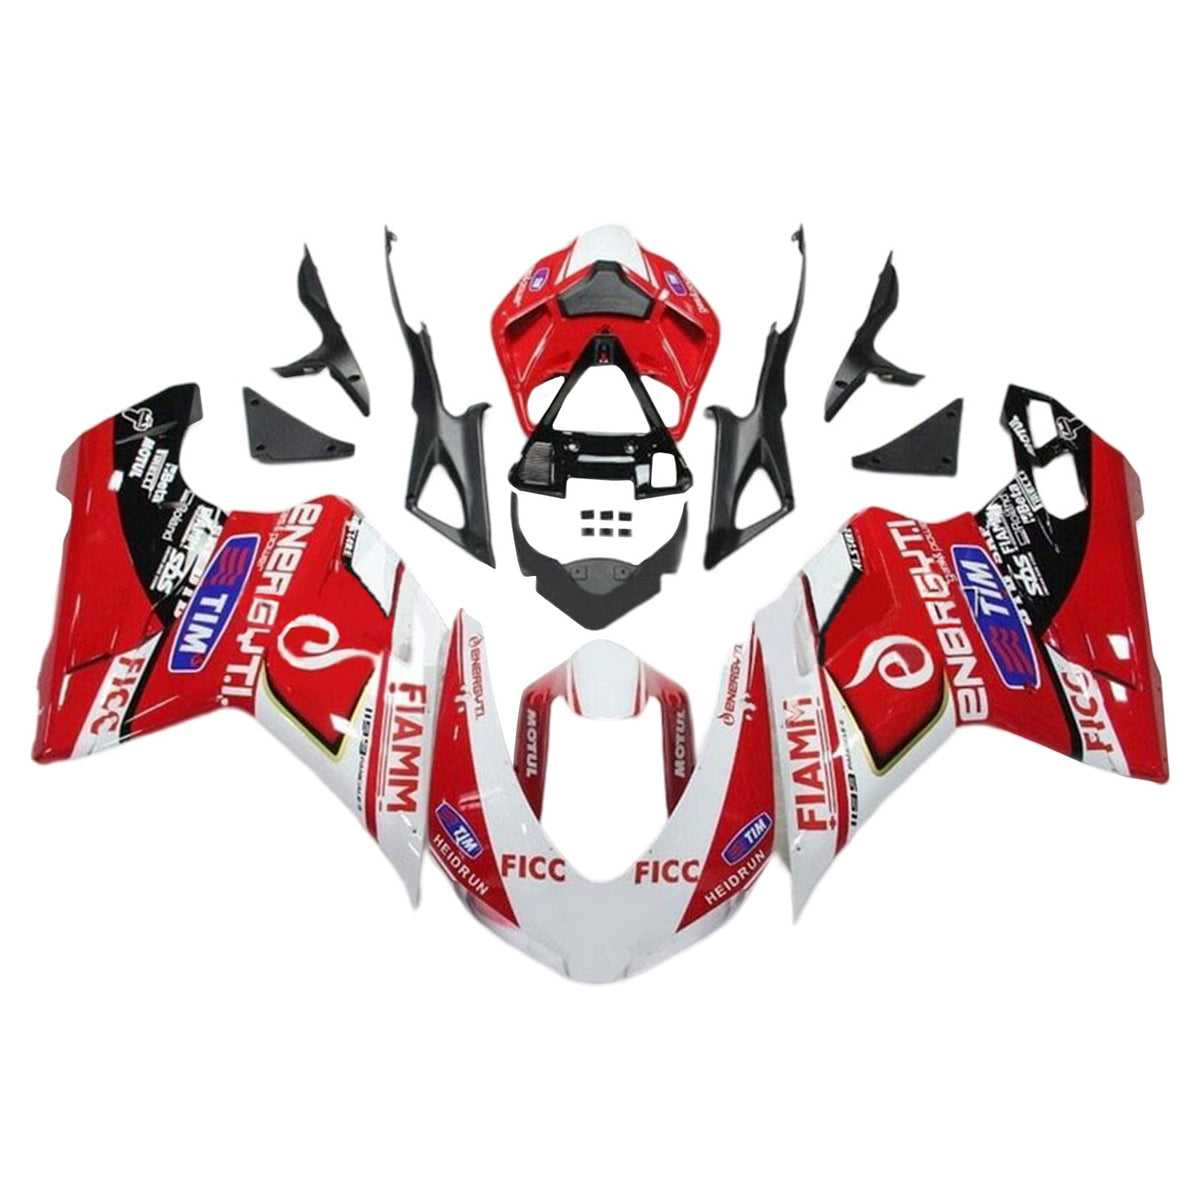 Amotopart 2015-2020 Ducati 1299 959 Red Style3 Fairing Kit